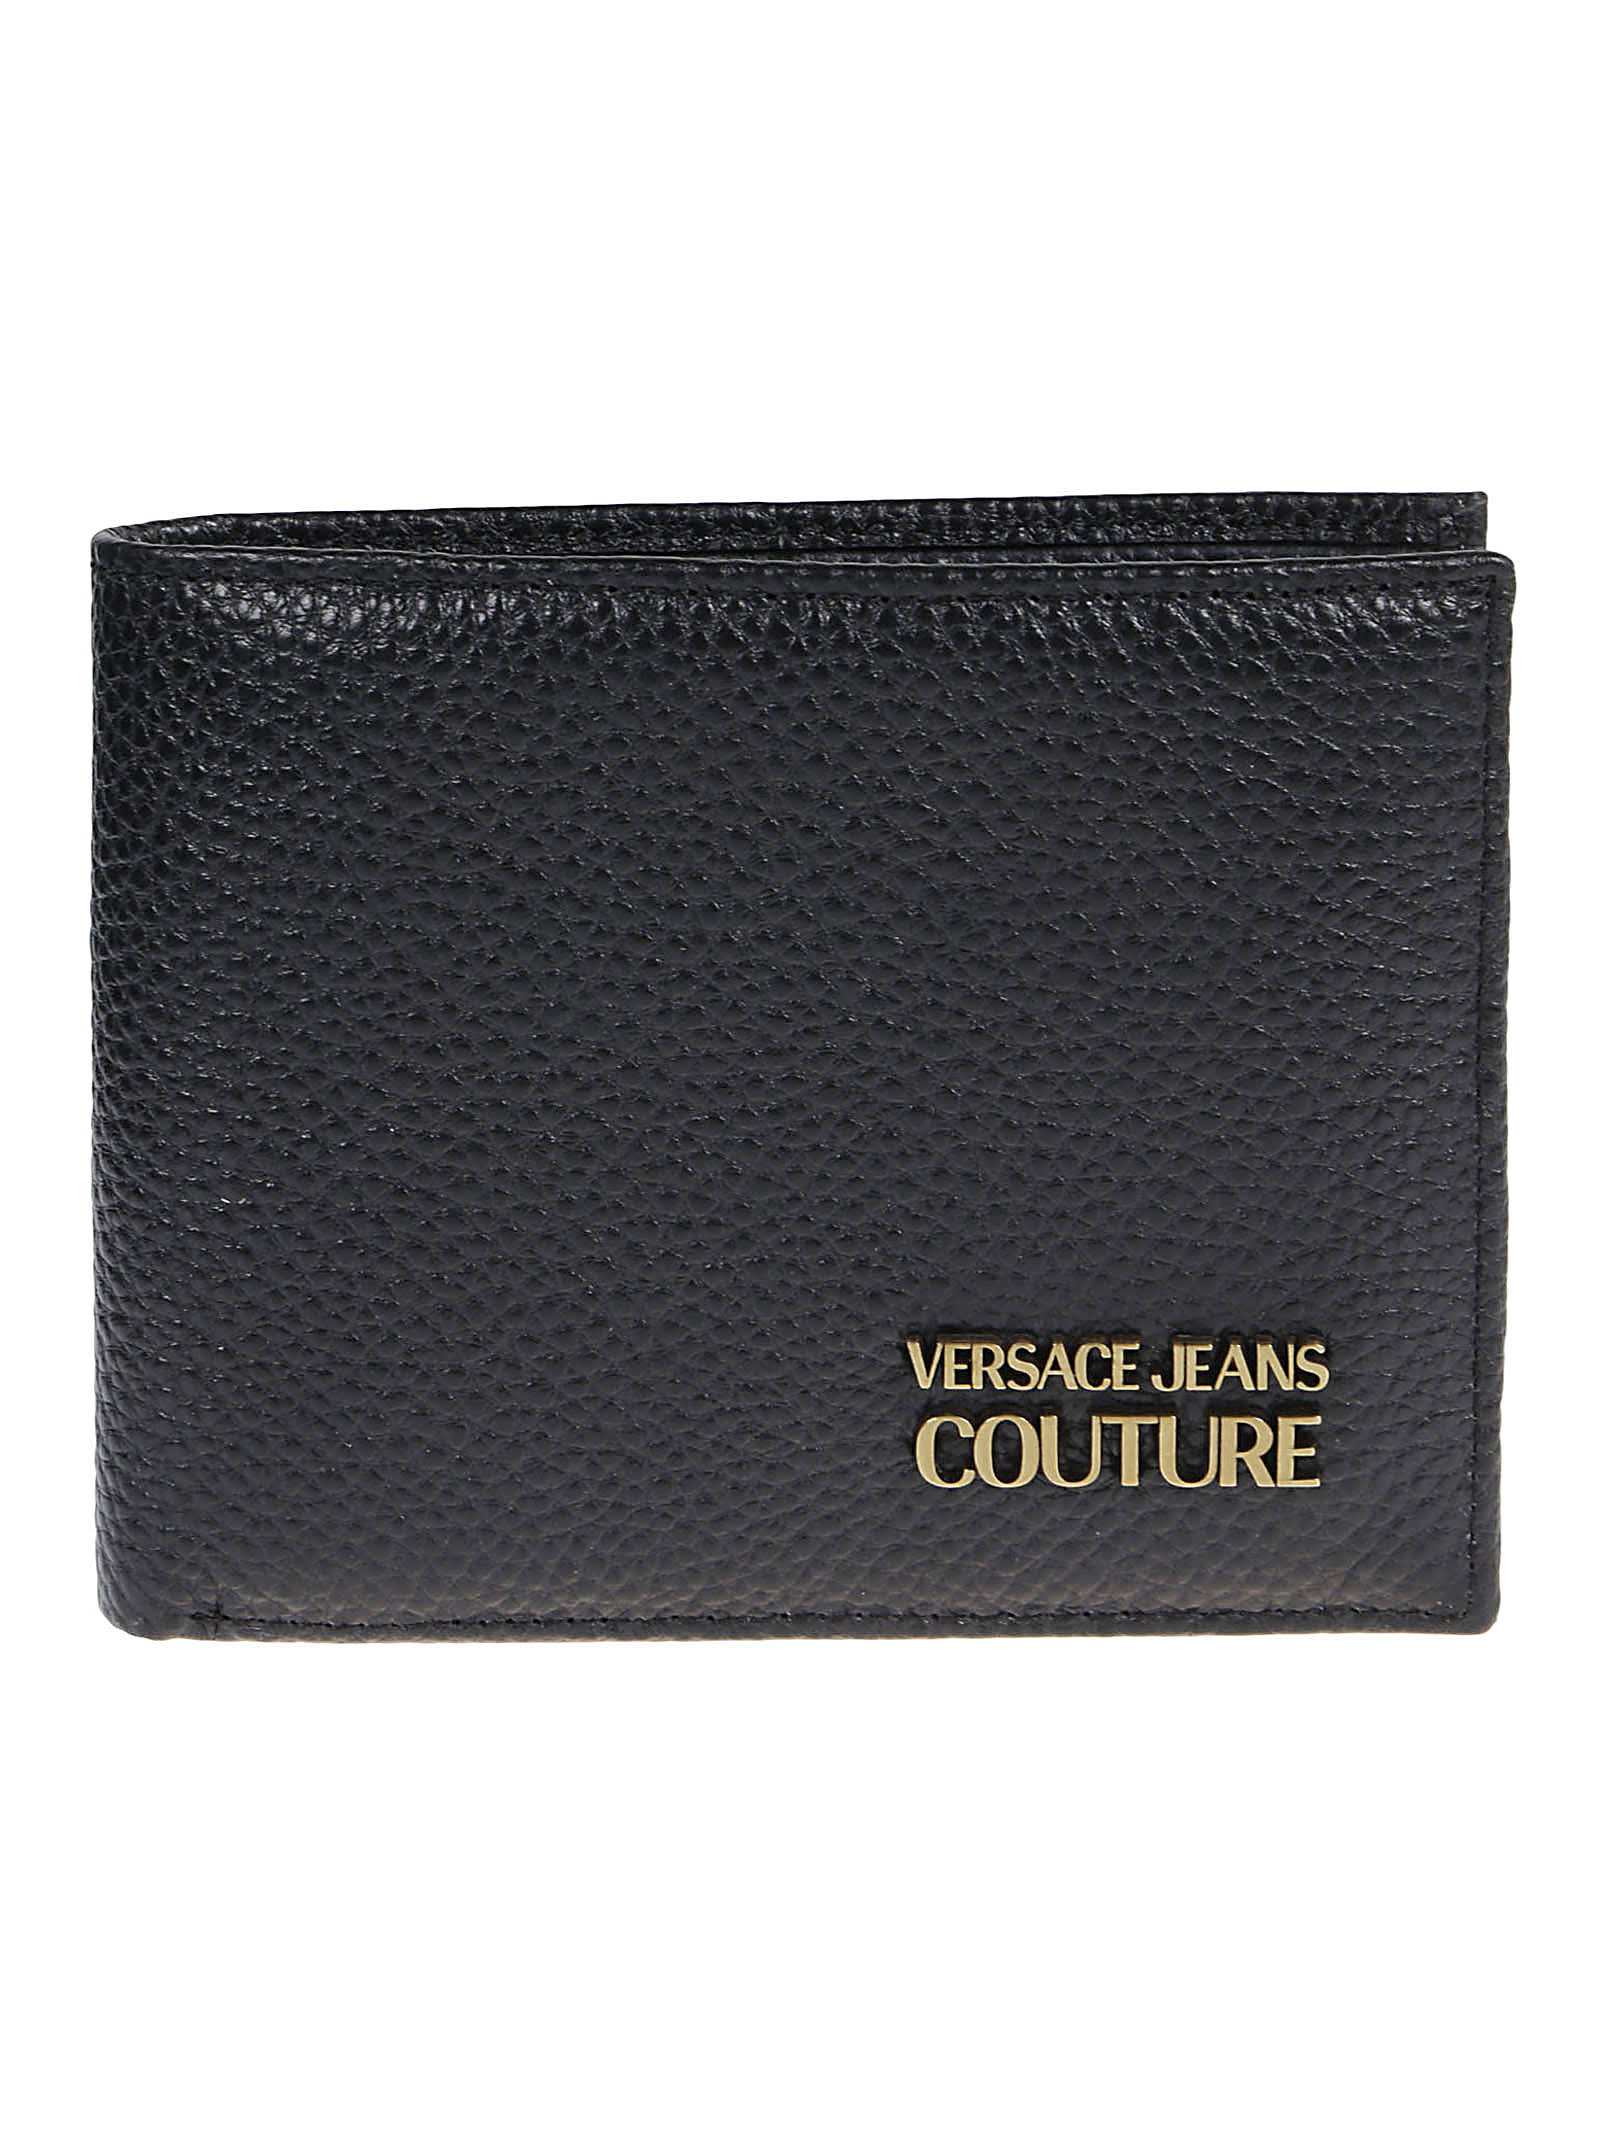 Versace Jeans Couture Range Metal Lettering Sketch 1 Wallet